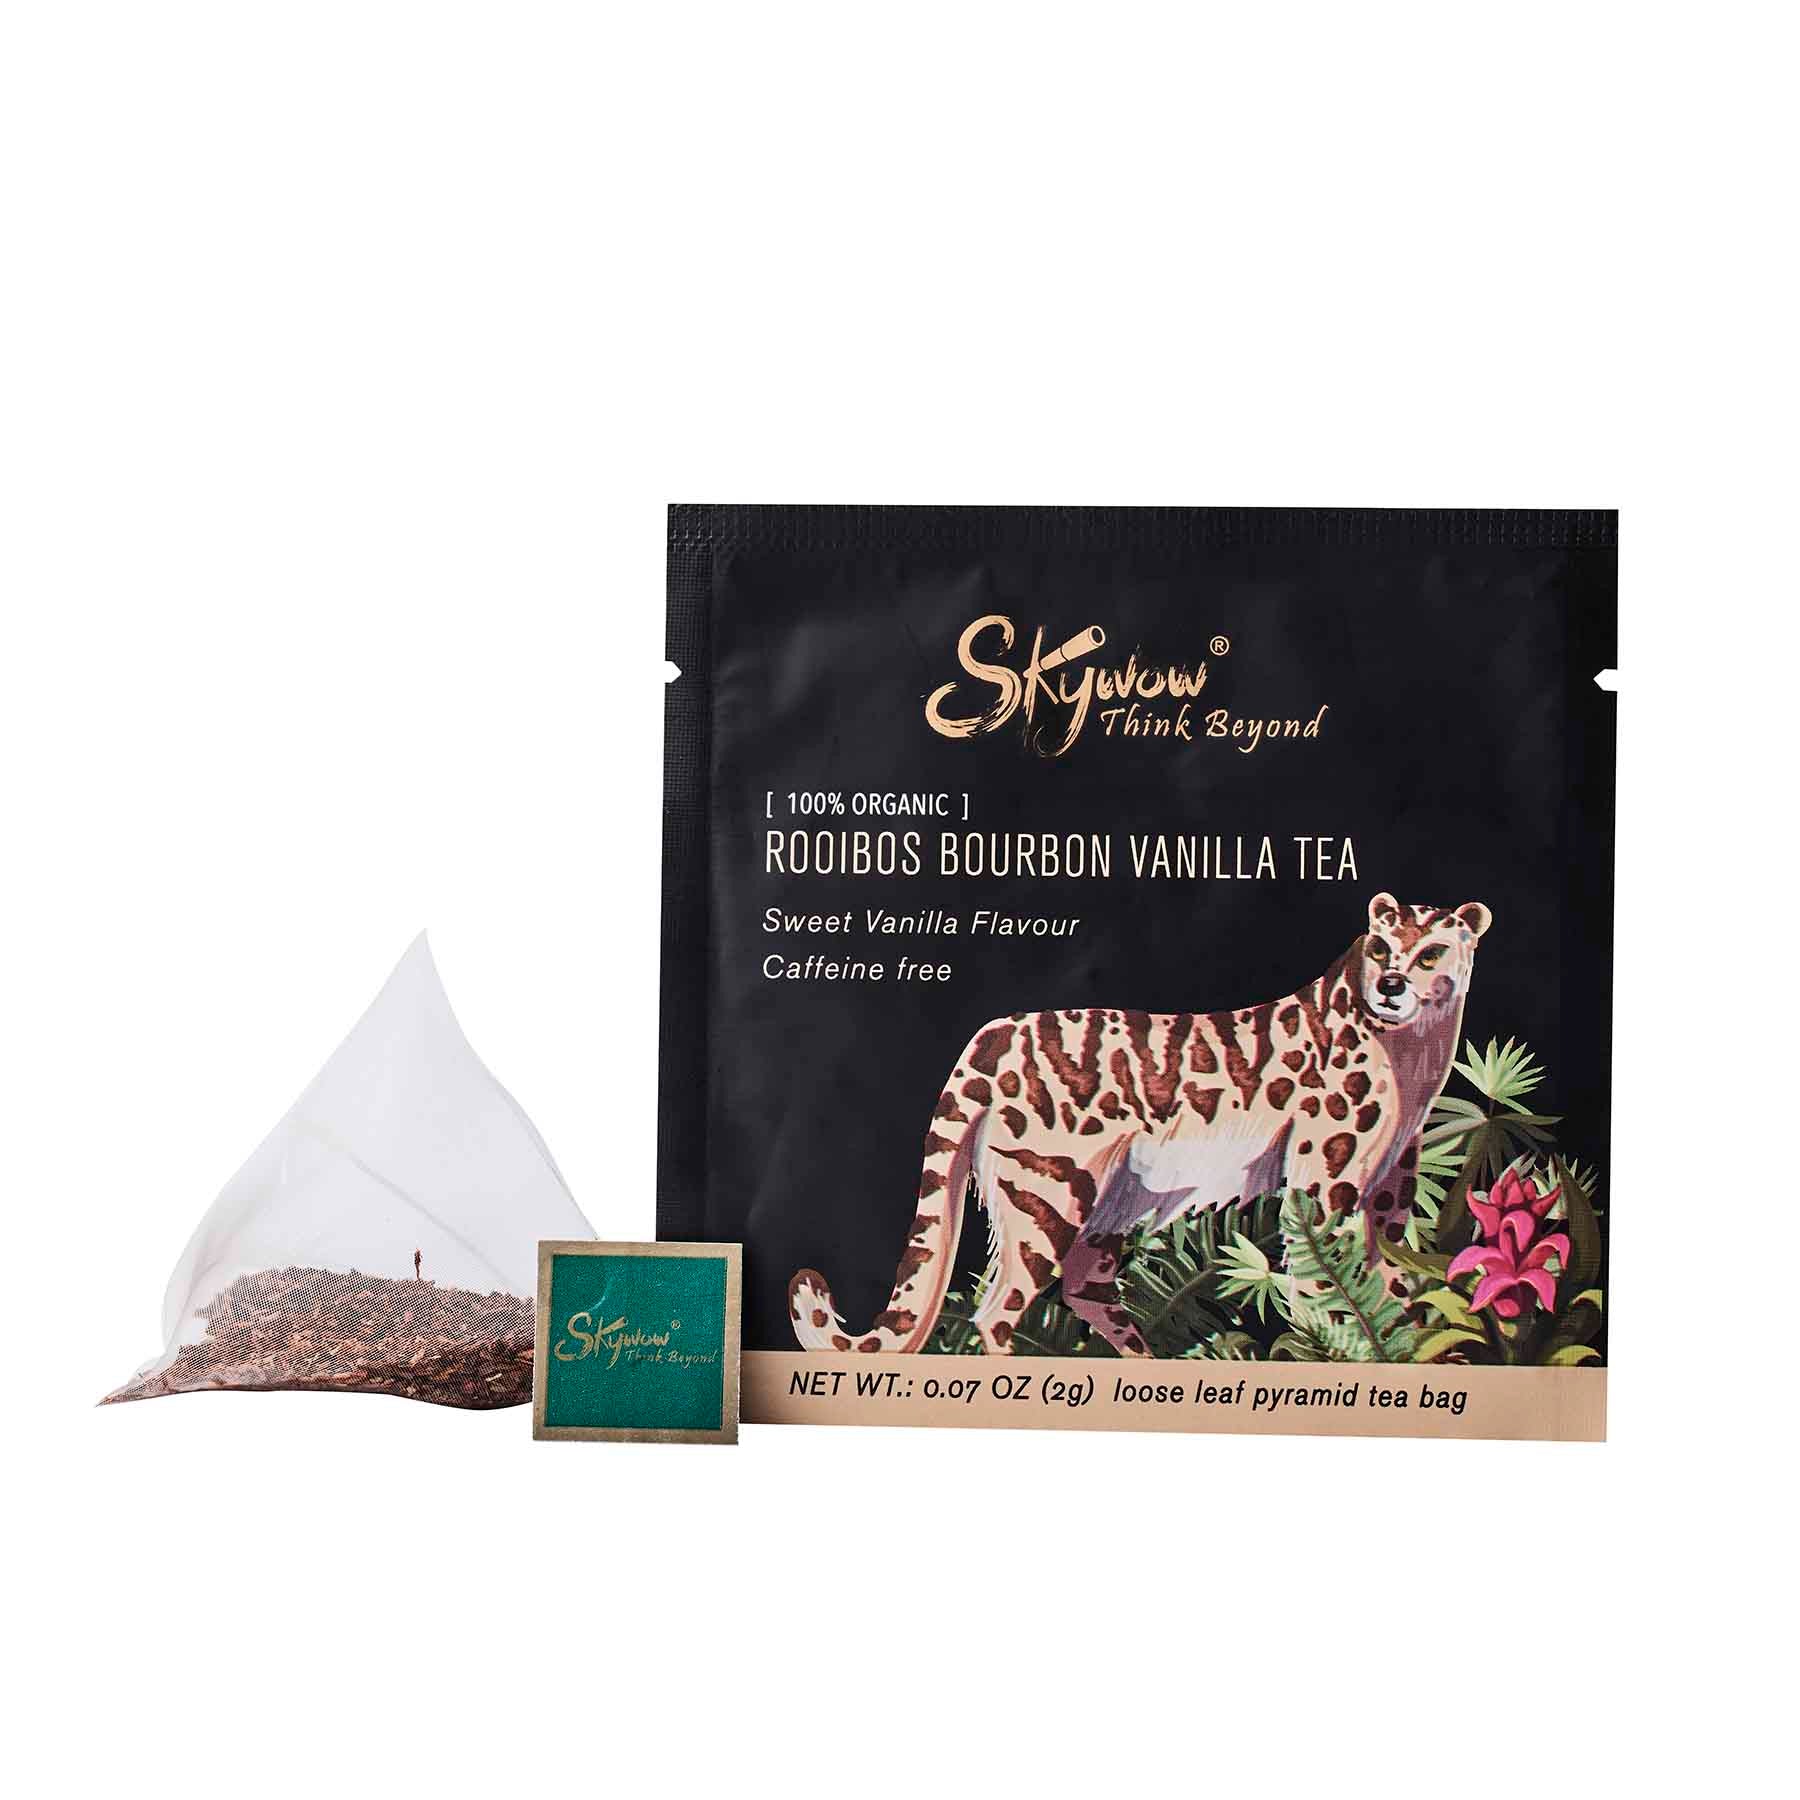 Skywow Rooibos Bourbon Vanilla Tea individual pyramid teabags